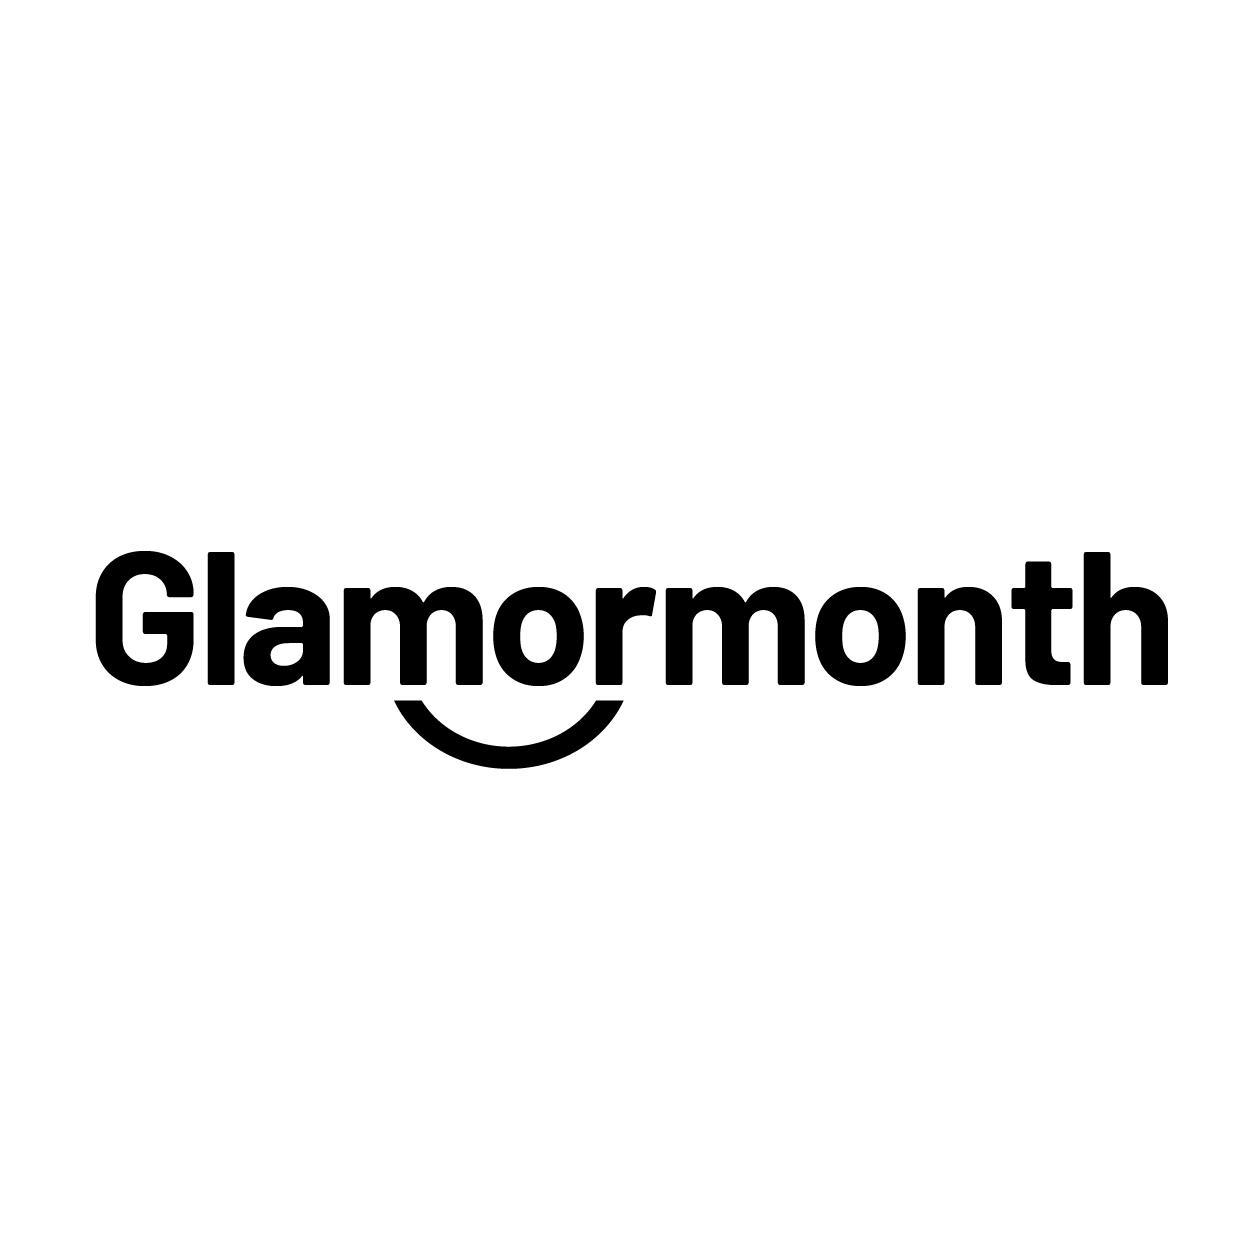 GLAMORMONTH